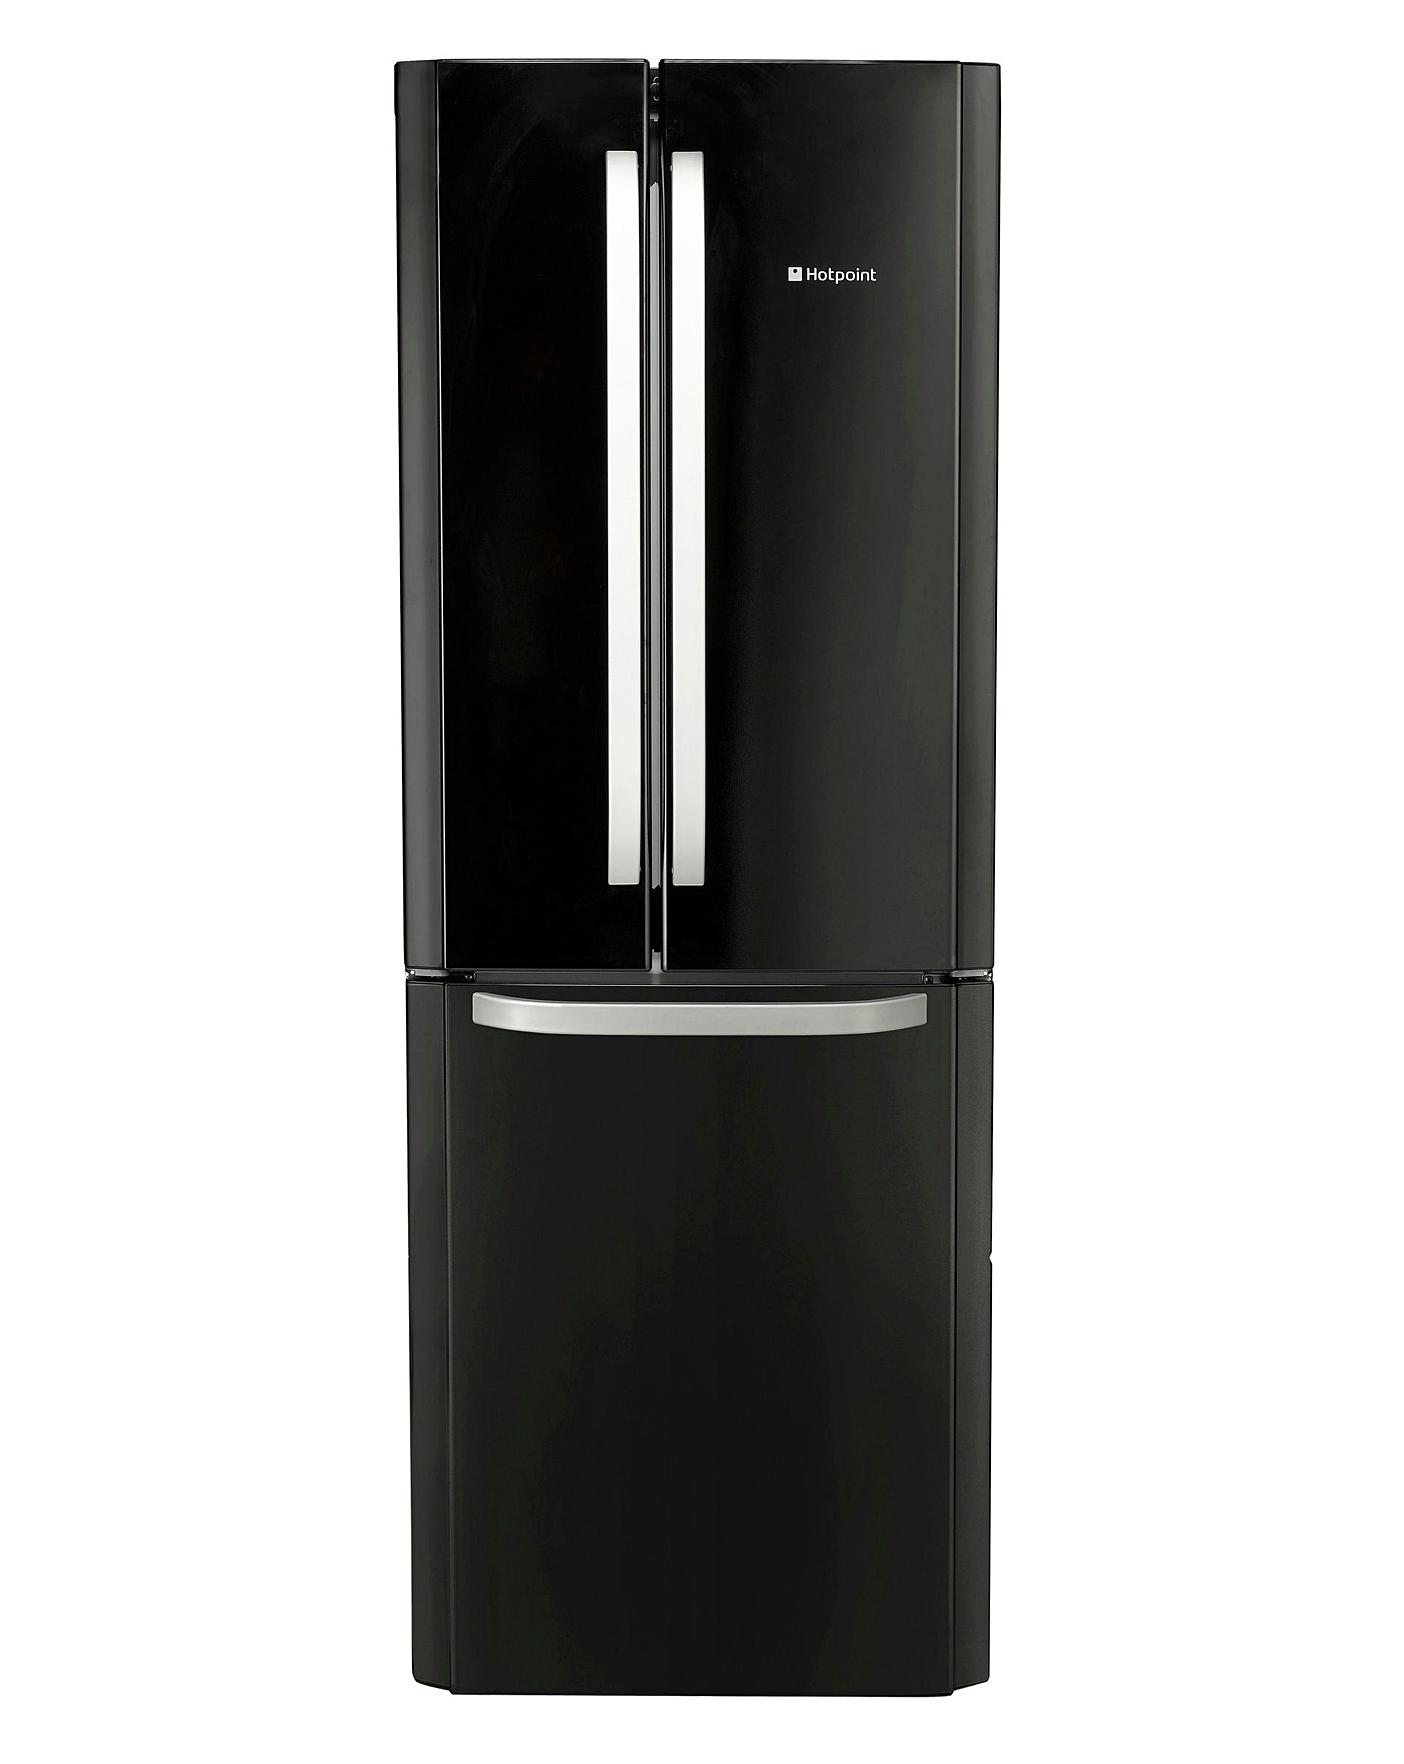 48++ Hotpoint fridge freezer jd williams ideas in 2021 